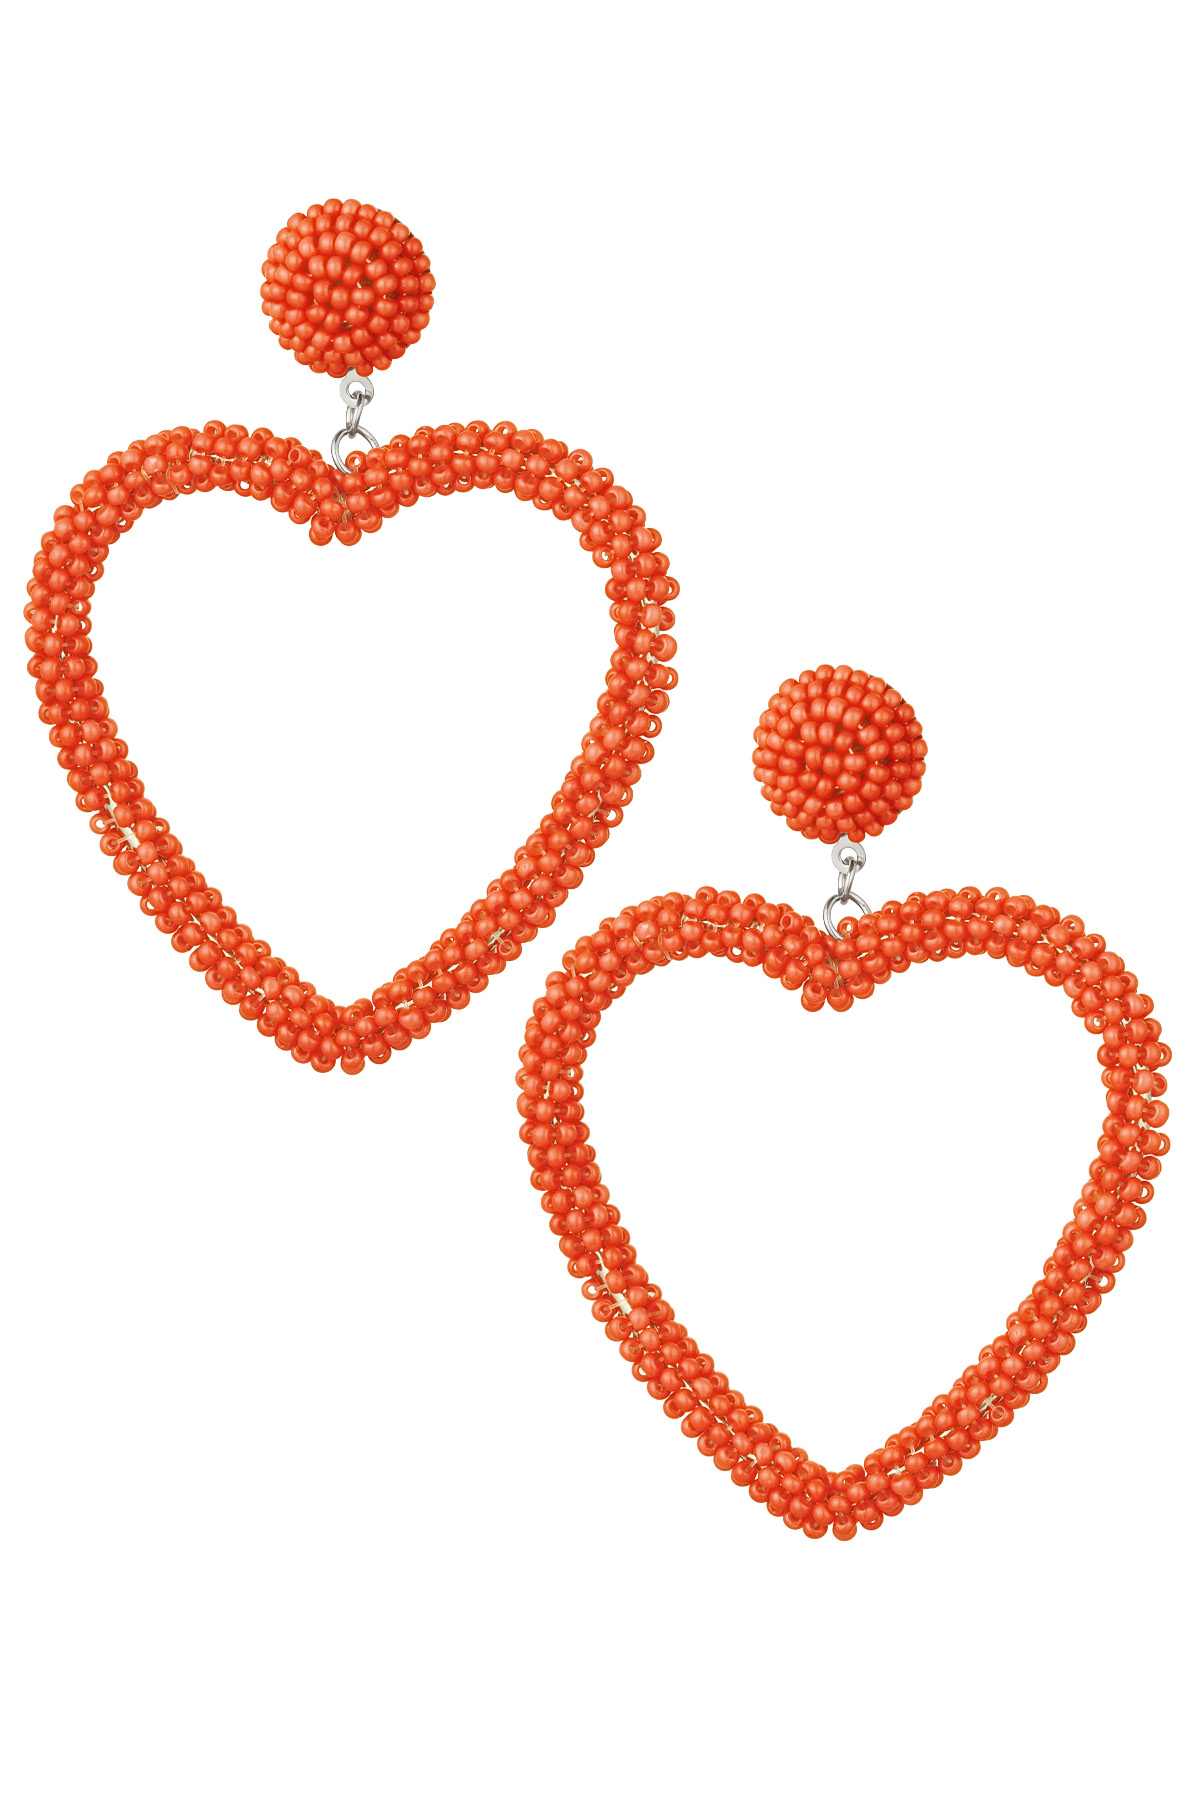 Earrings beads candy - orange Stainless Steel